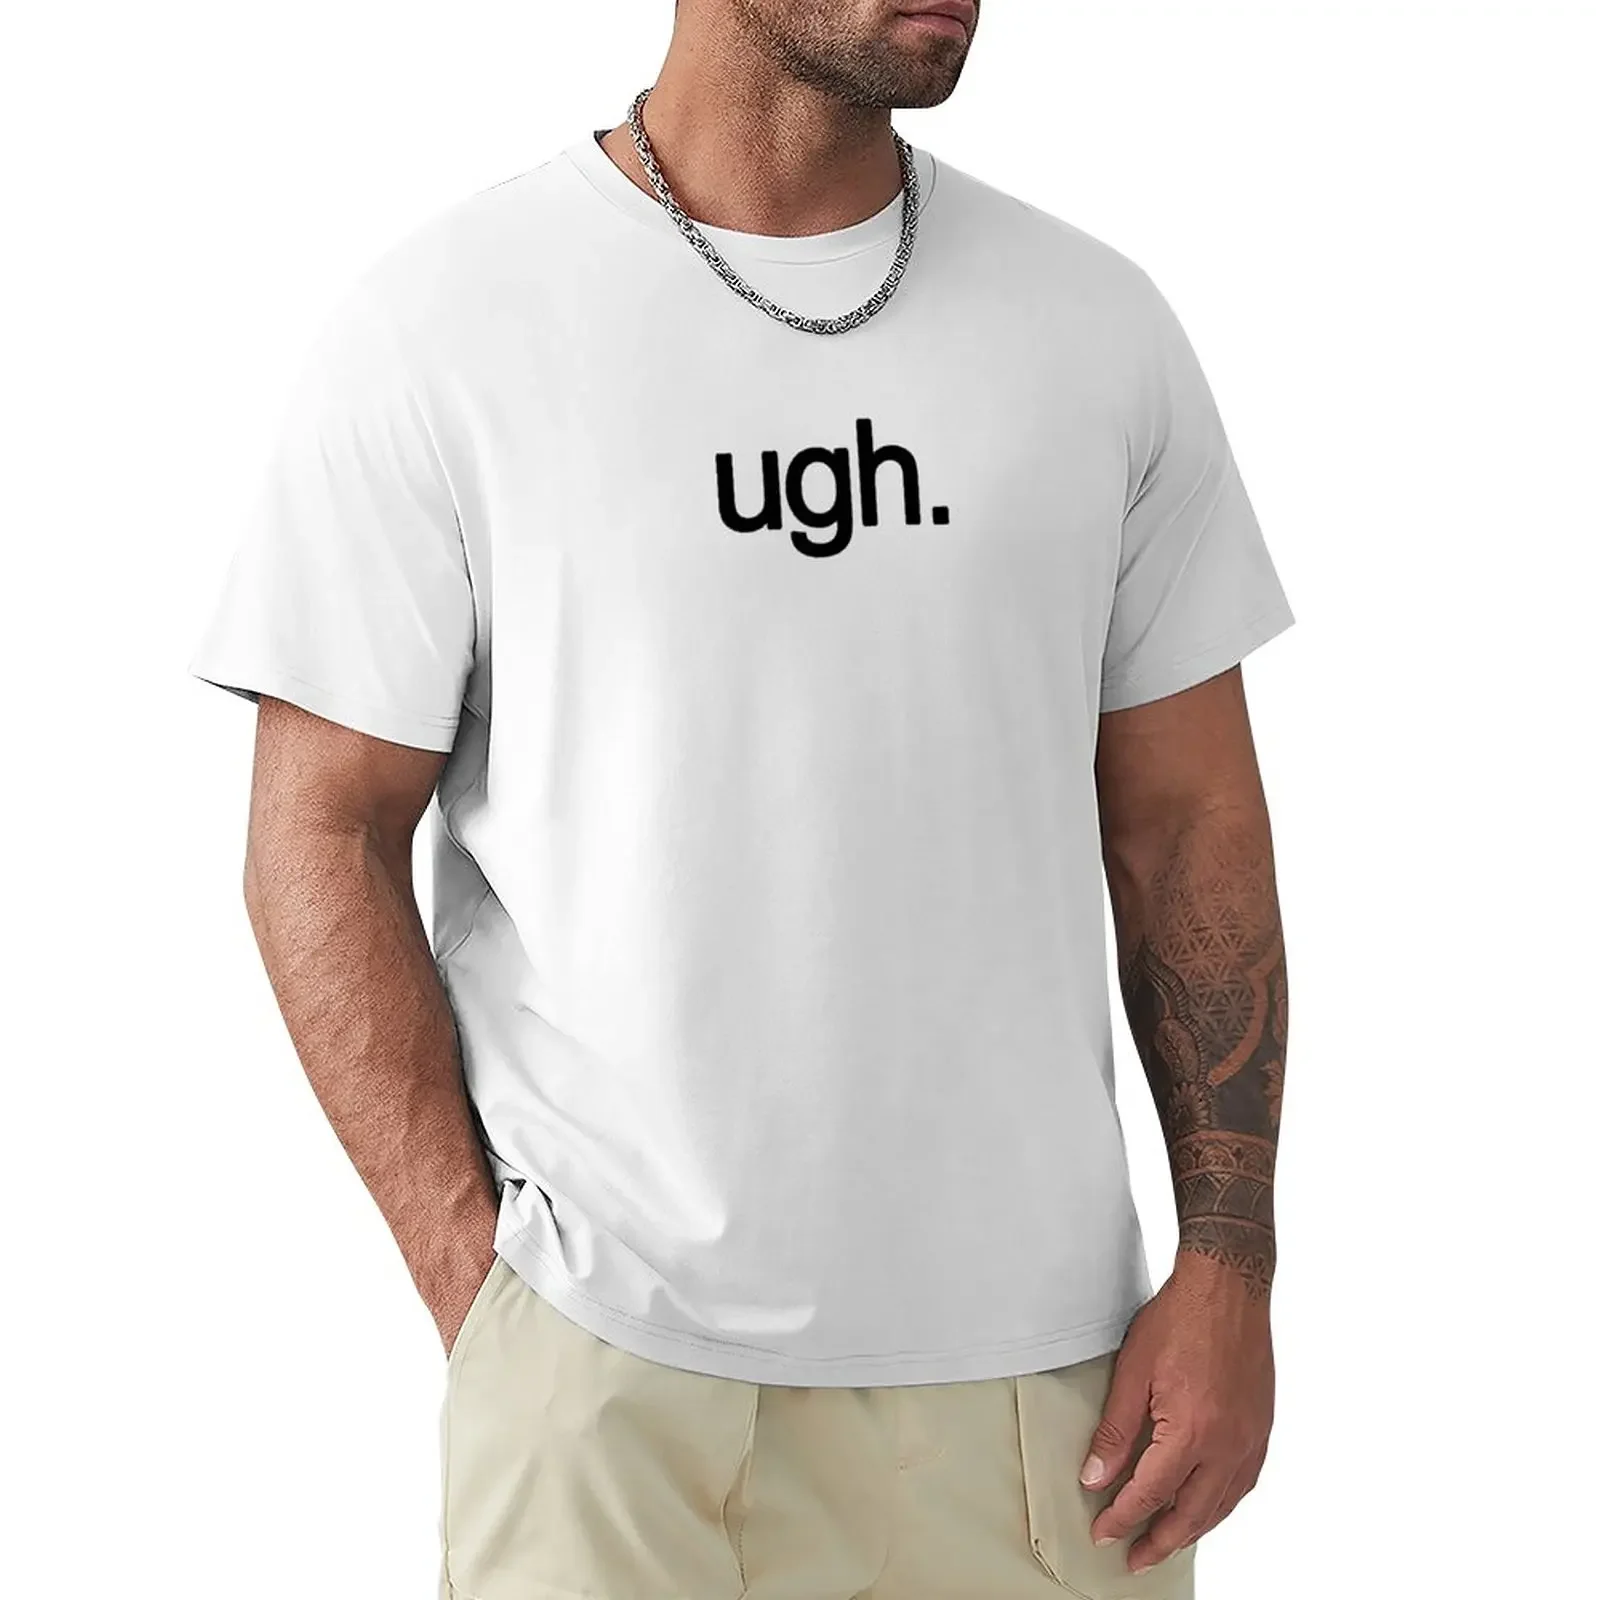 

Ugh. T-Shirt cute tops graphics plus sizes mens cotton t shirts plain customs design your own summer tops t shirt men